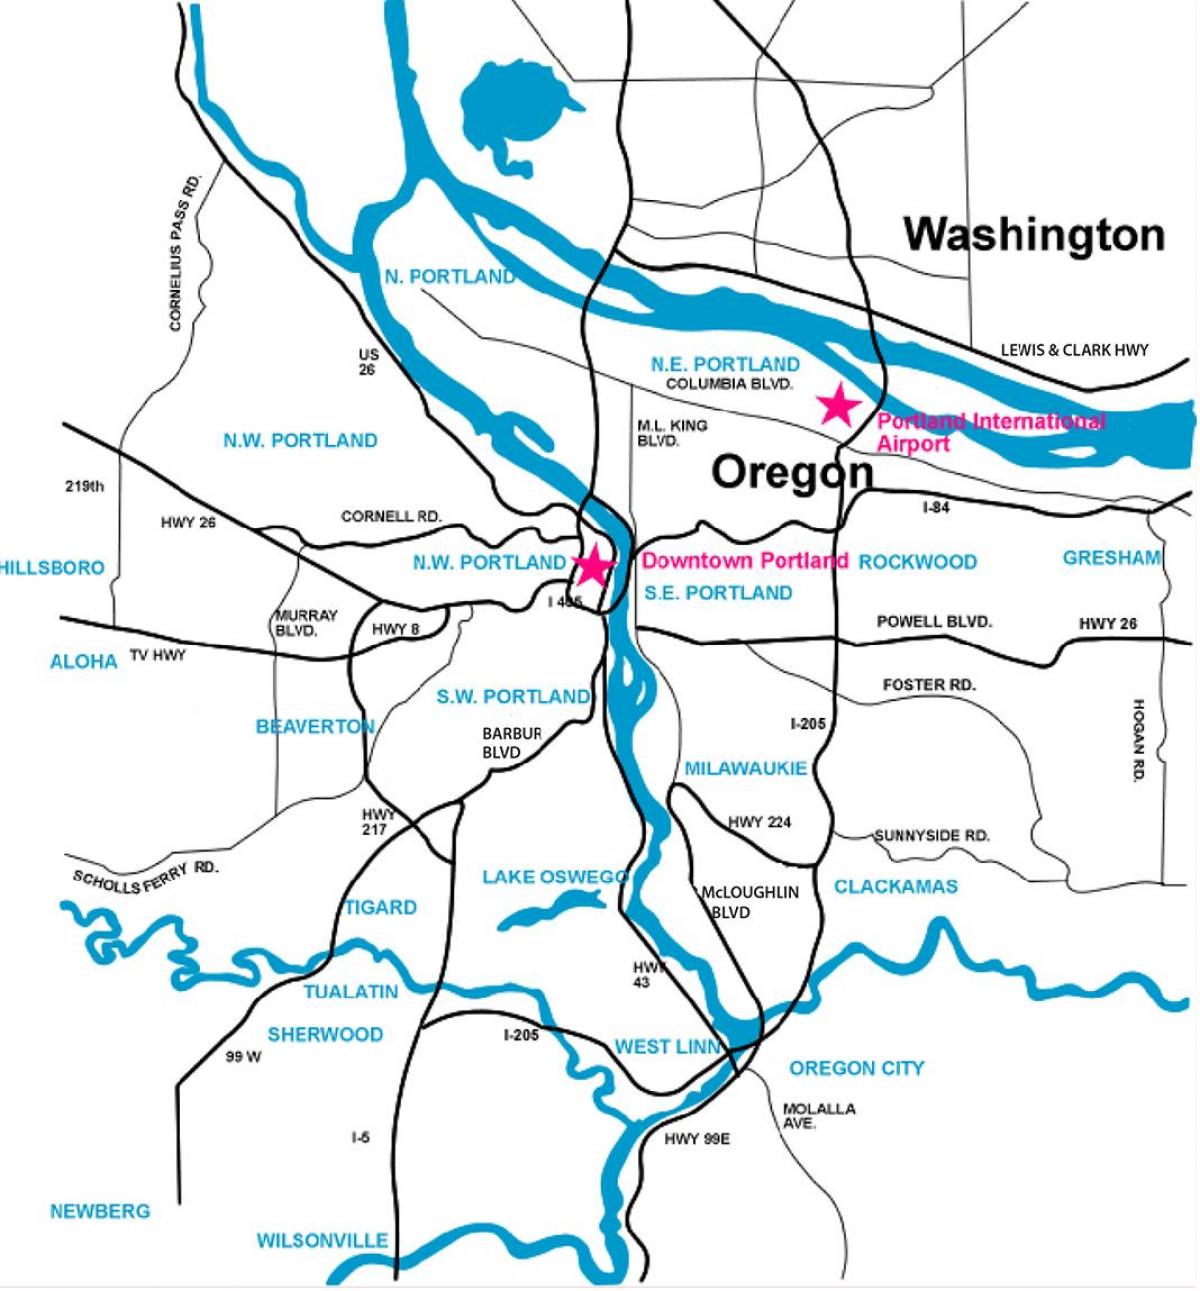 Portland ala kaart